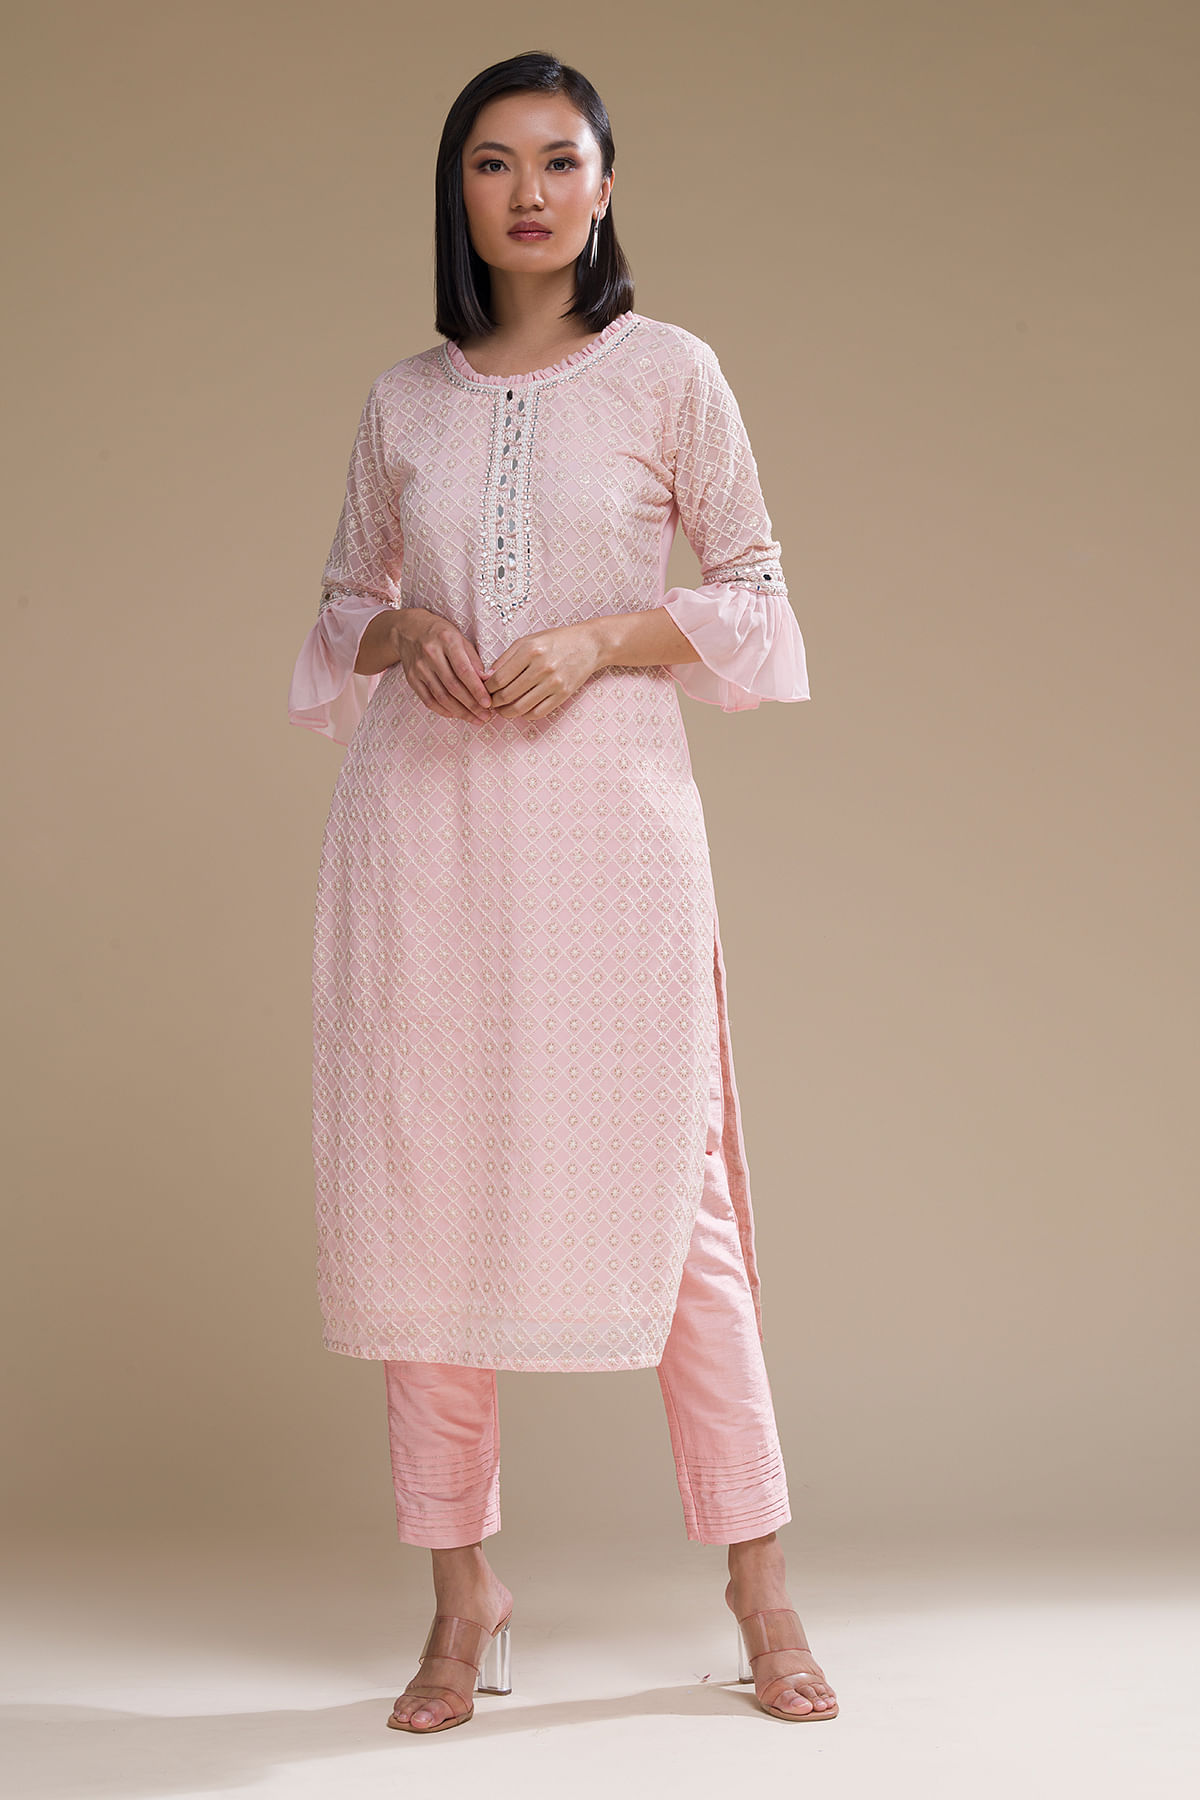 Buy Pink Casual Wear Indian Kurti Tunic Online for Women in USA